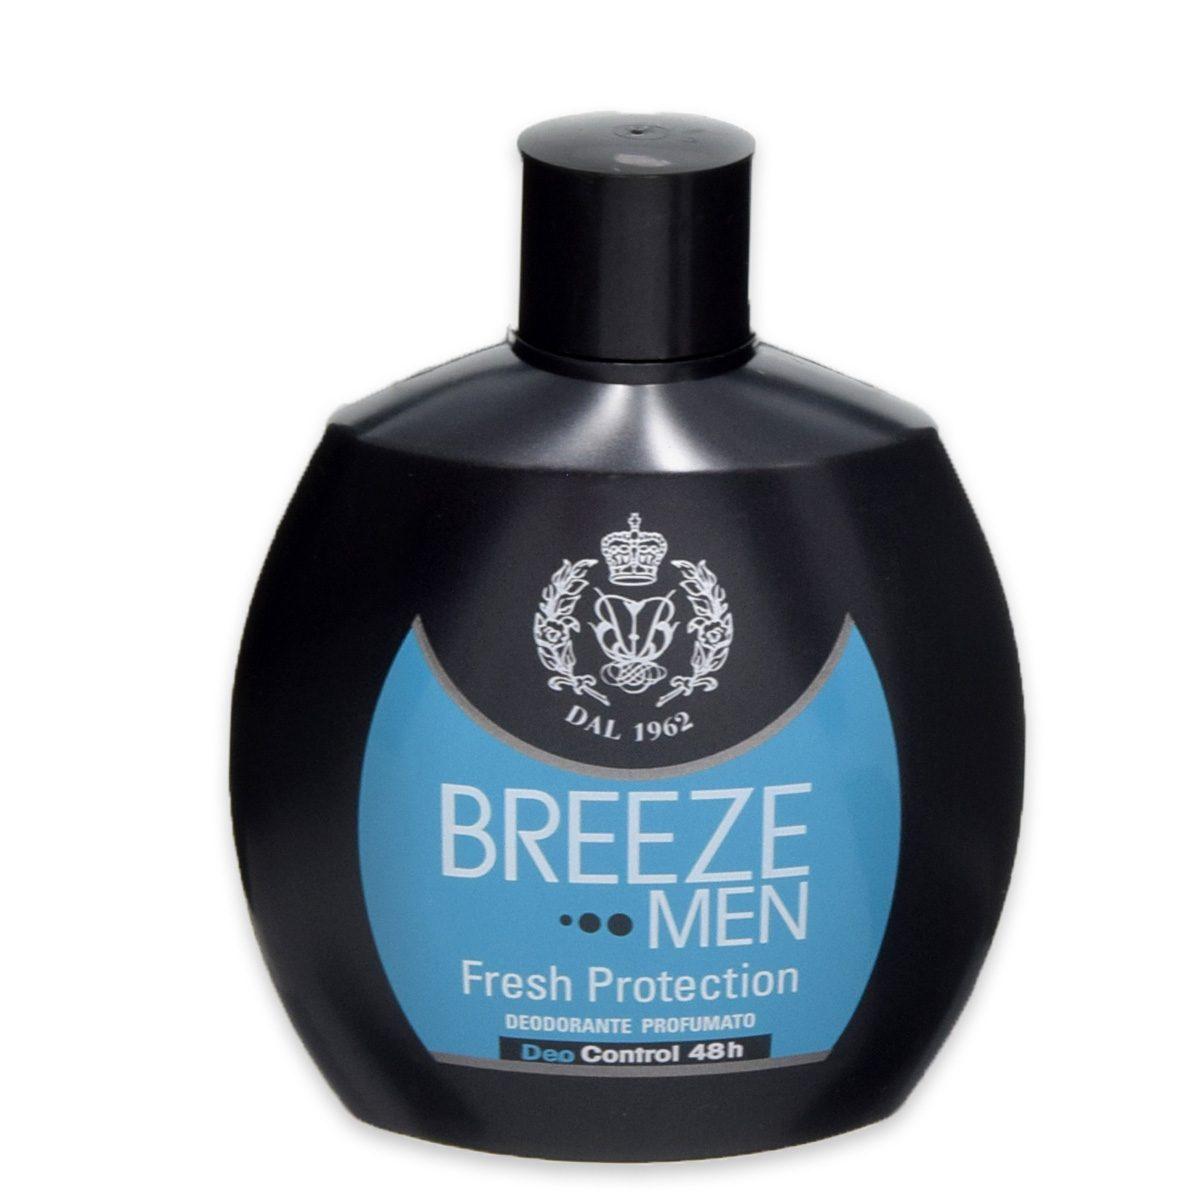 Breeze deo squeeze 100 ml men fresh protection